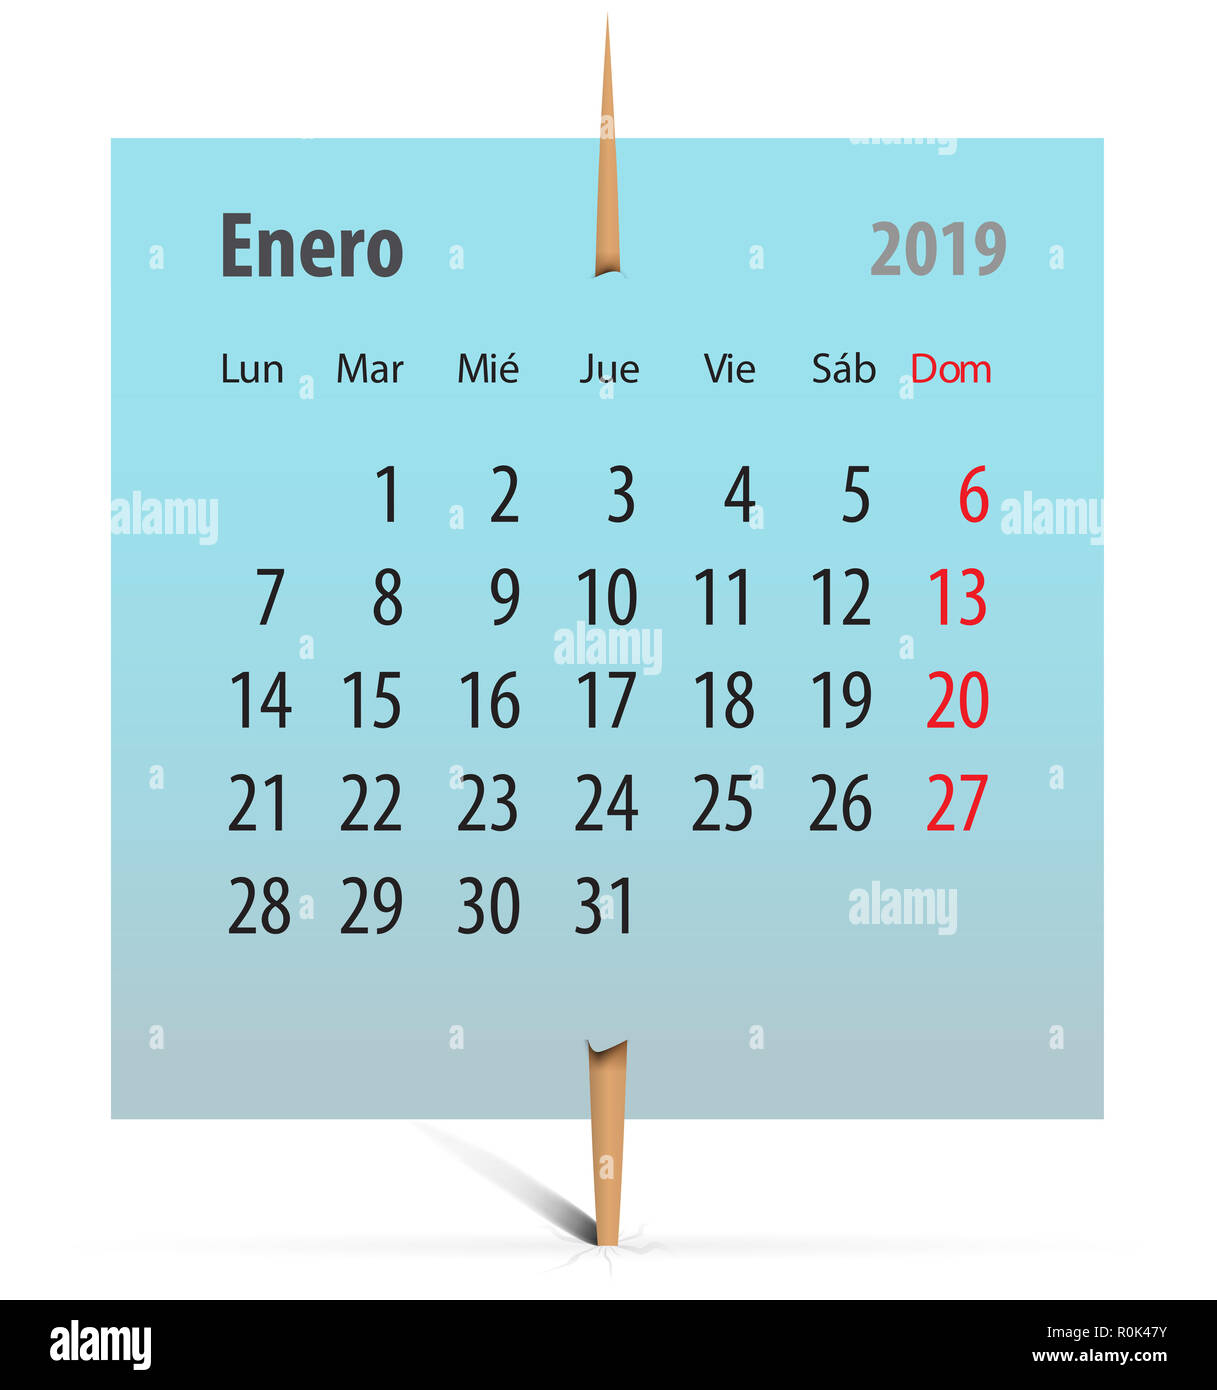 2024 spanish calendar. Printable vector illustration for Spain. 12 months  year calendario. Portrait Stock Vector Image & Art - Alamy